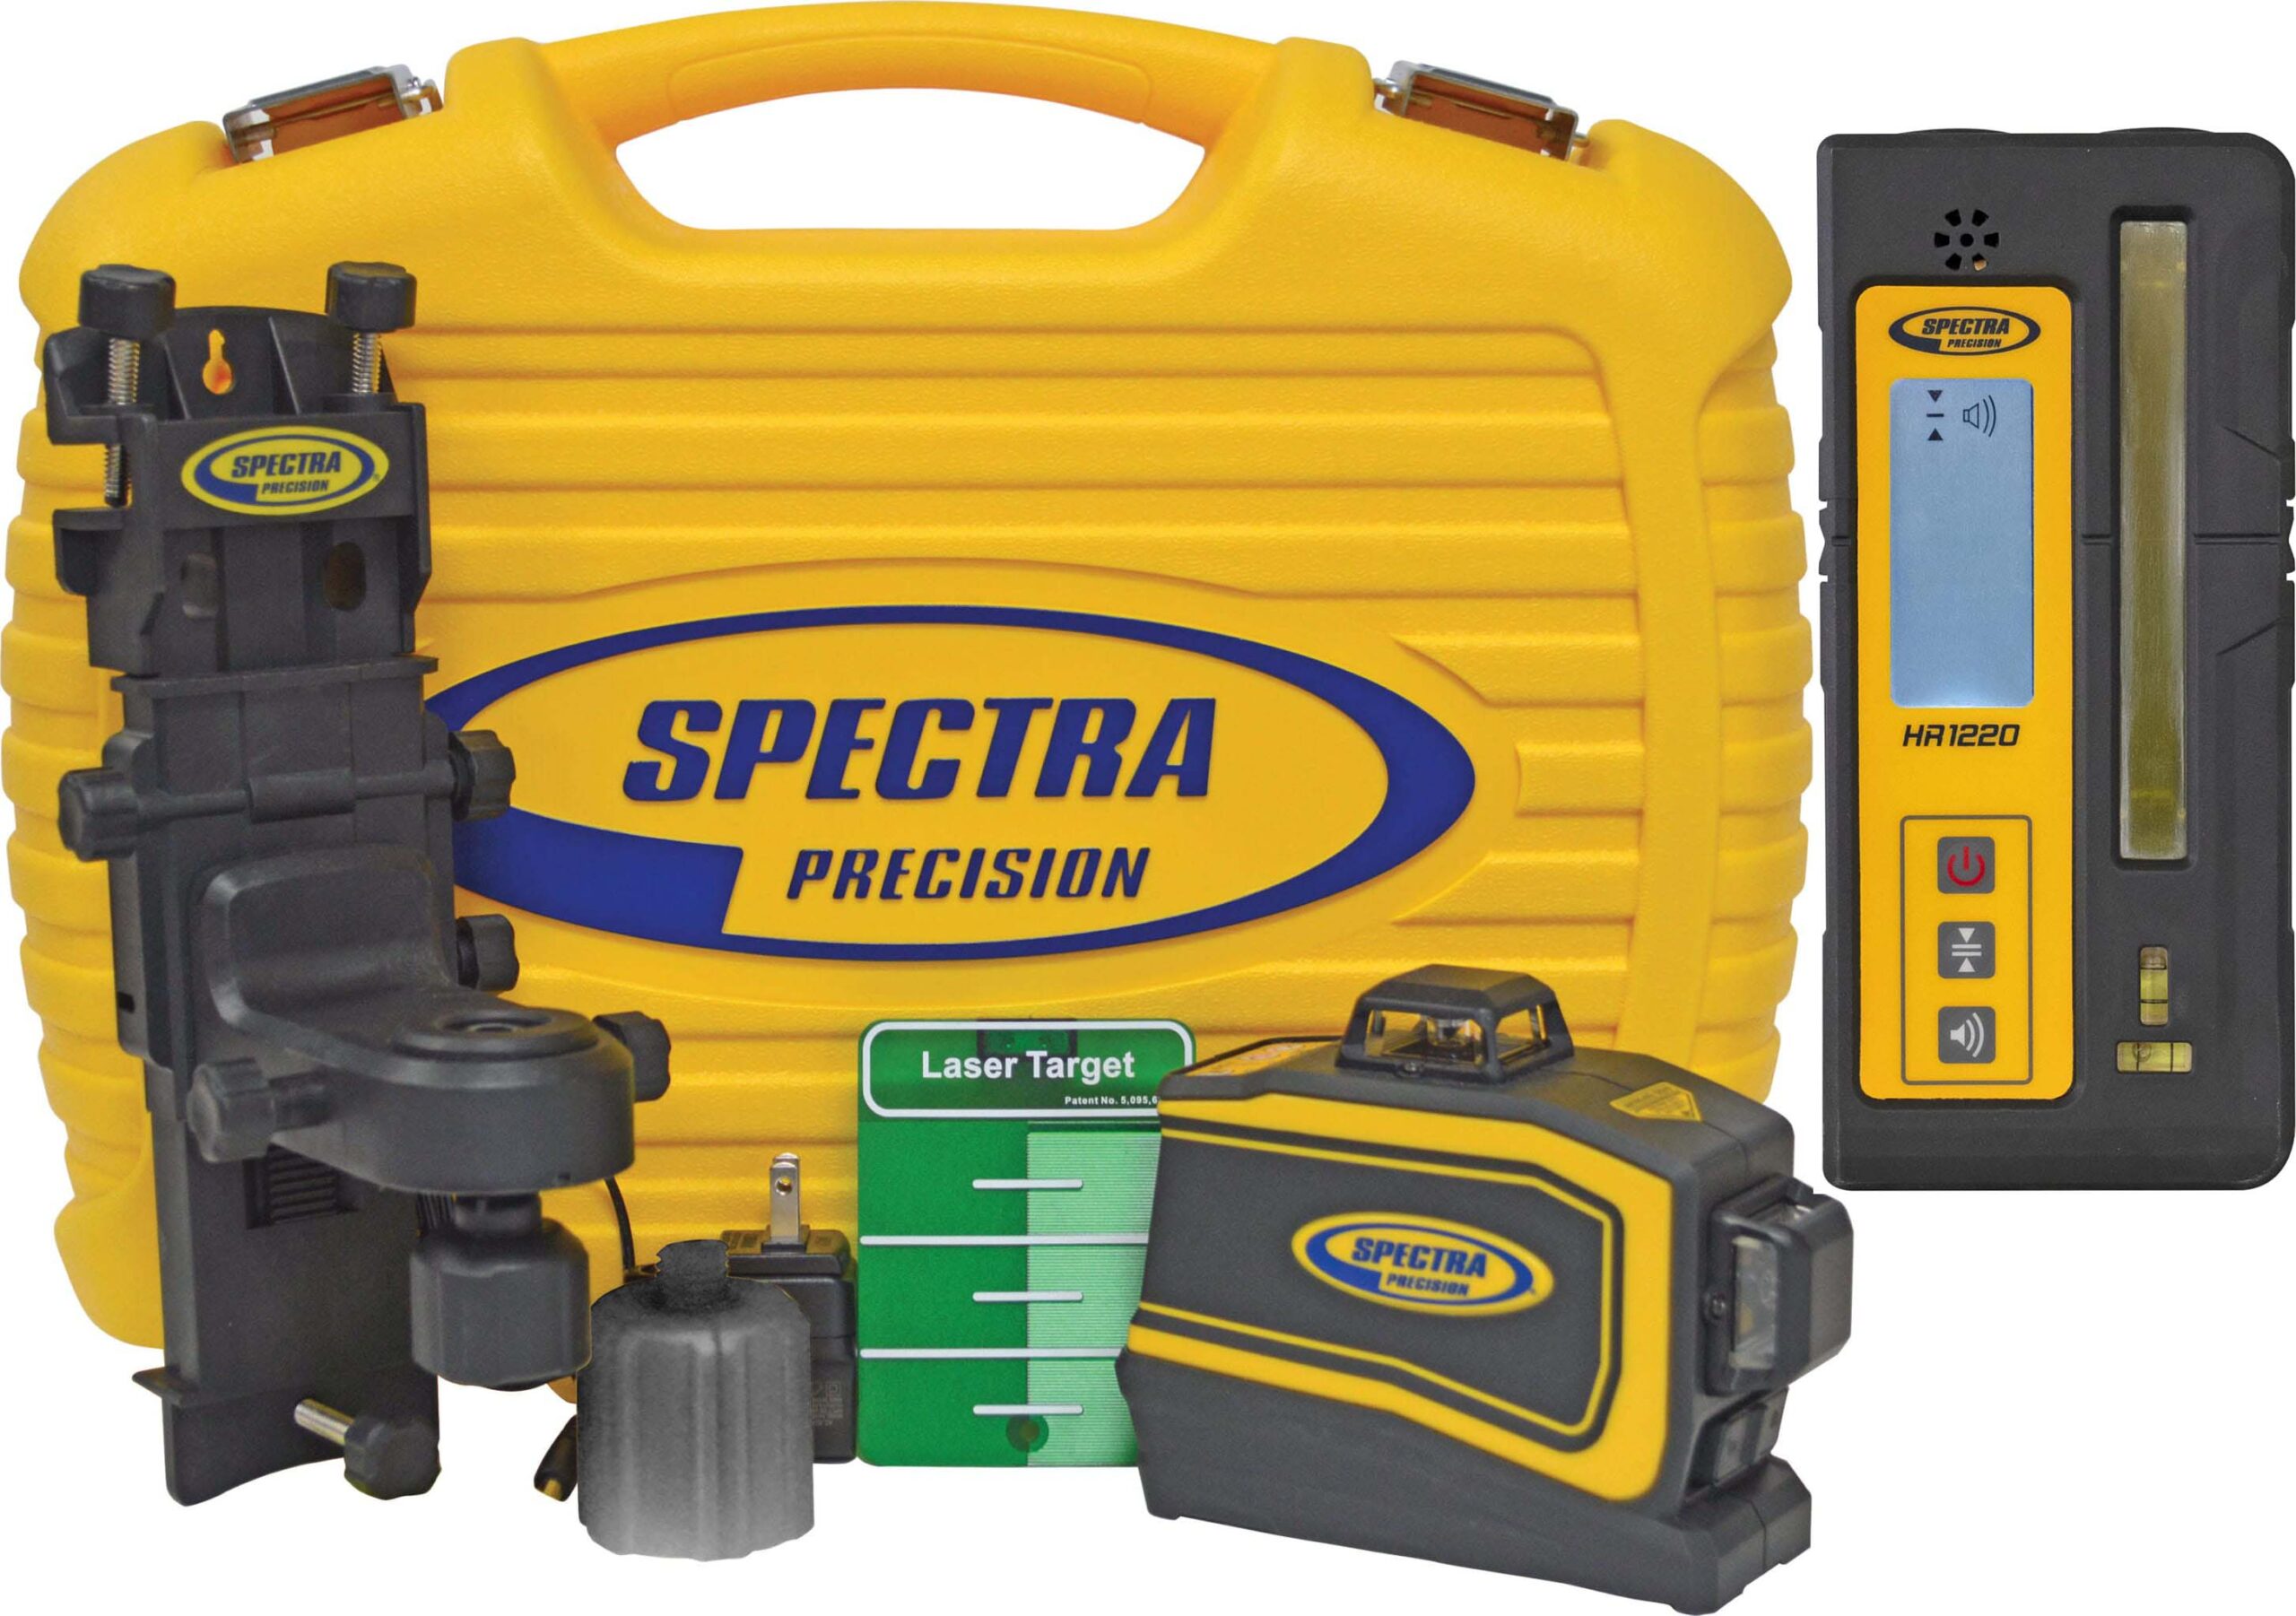 SPECTRA LT58G-2 3 X 360 Green Laser Tool w/HR1220 Receiver Kit - Jireh Tools